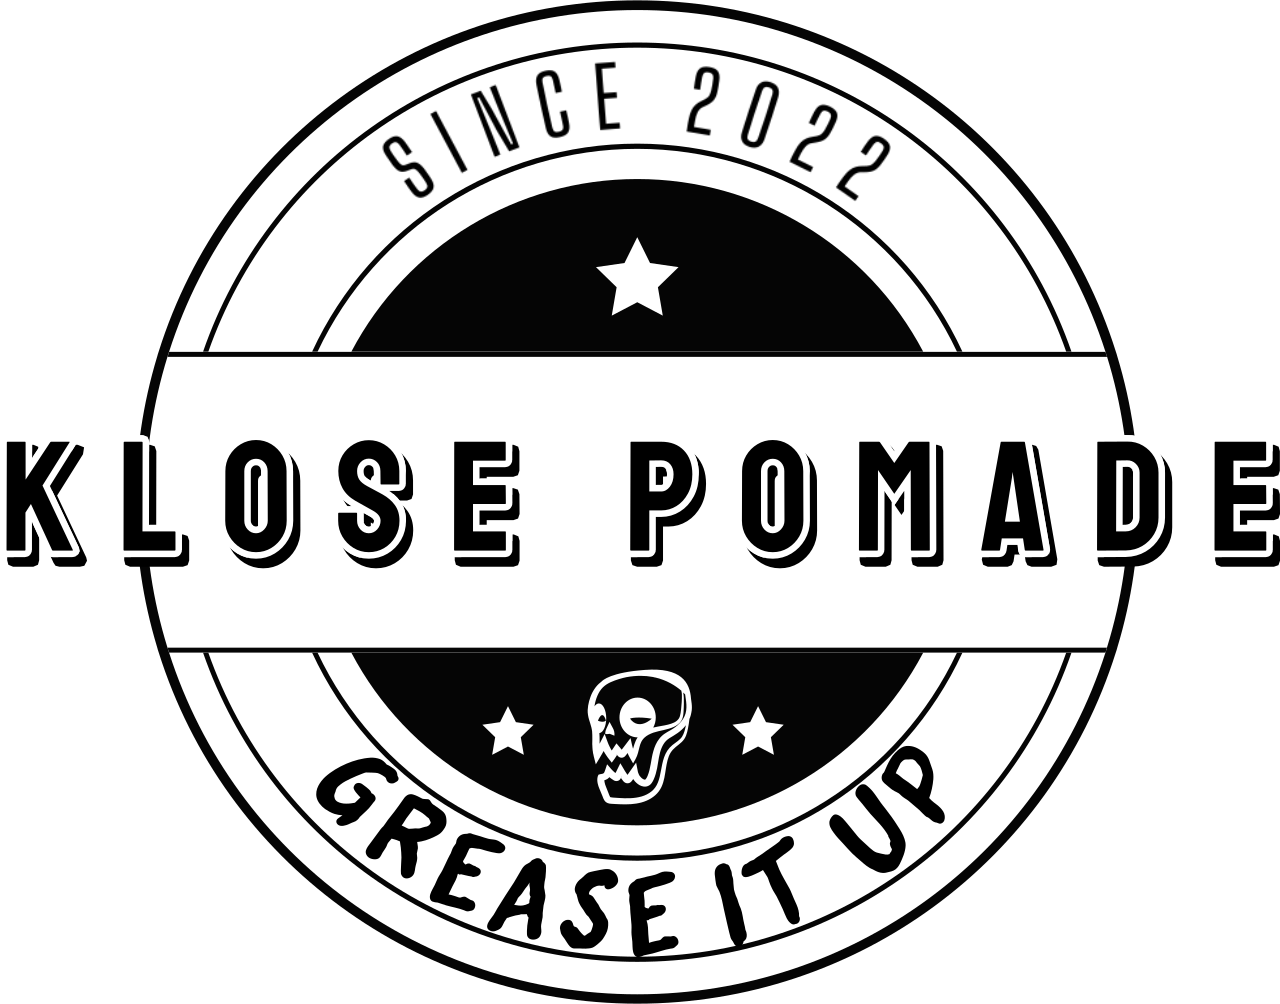 Klose Pomade's web page